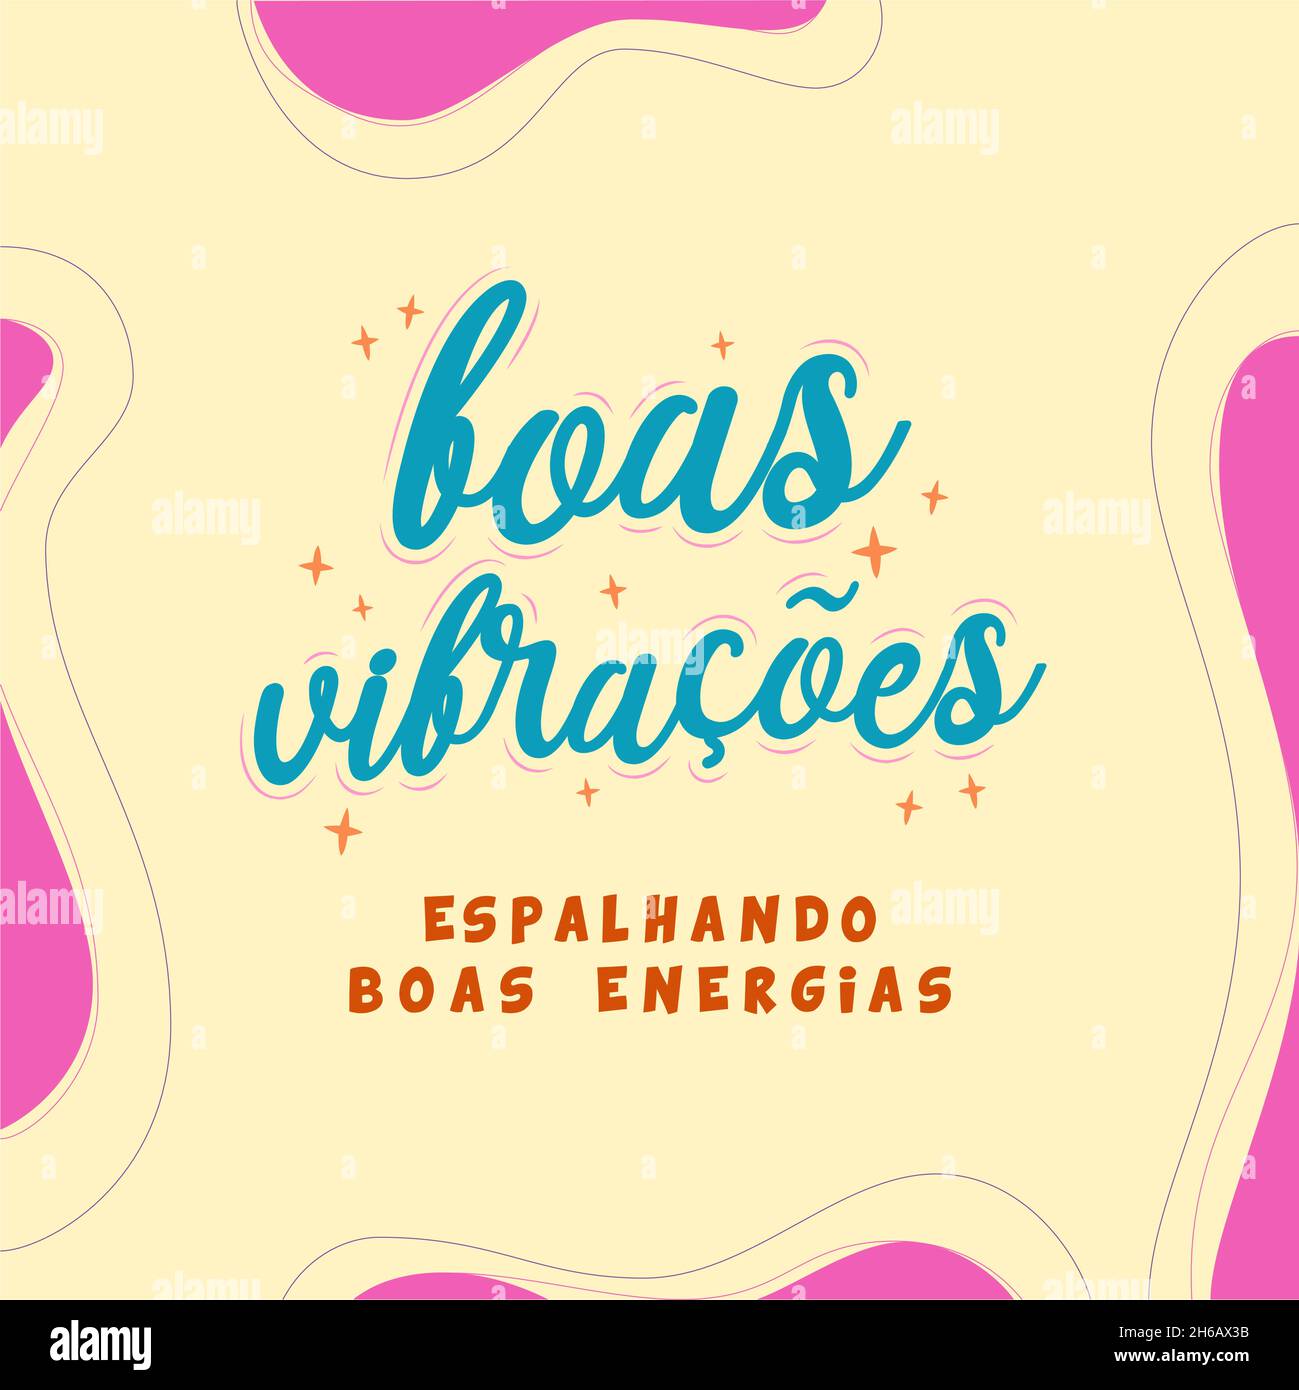 Motivational Brazilian Portuguese phrase. Translation - Good vibrations, spreading good energy Stock Vector